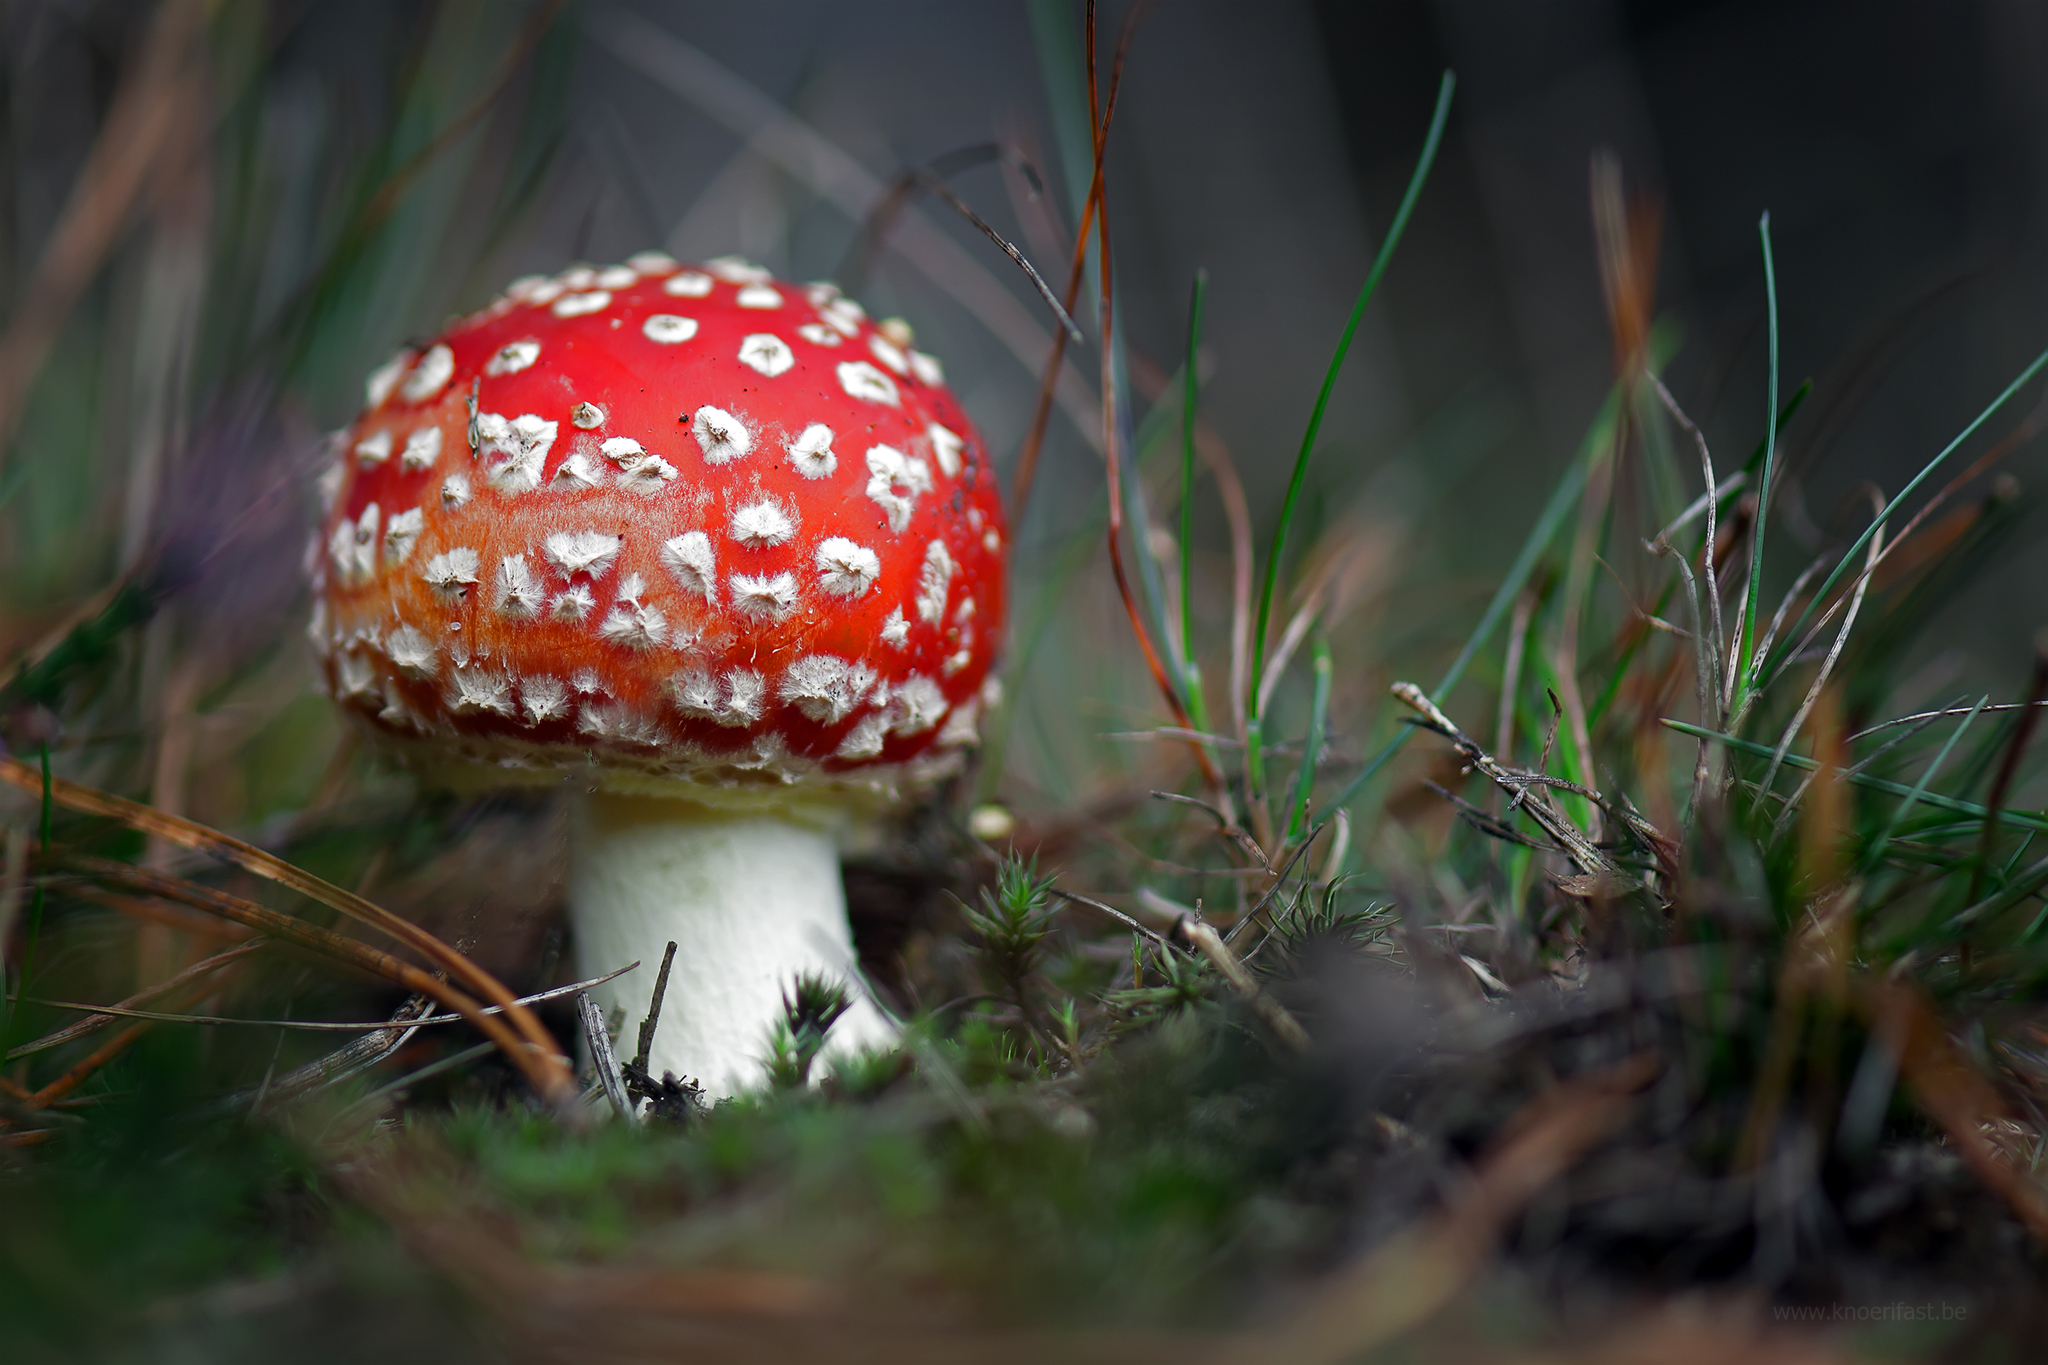 Another mushroom ...